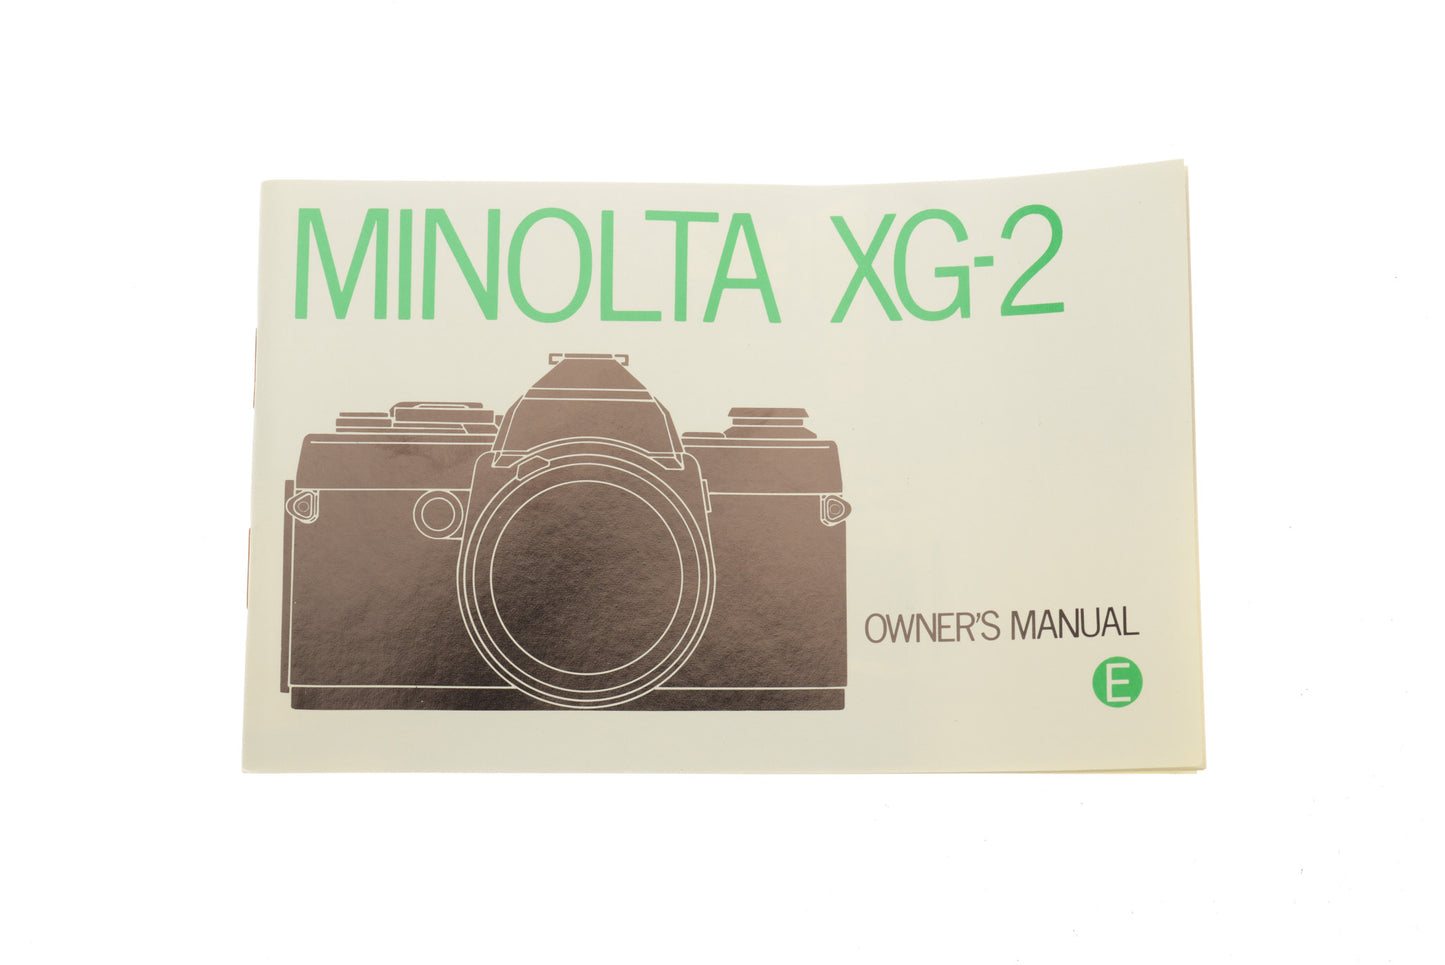 Minolta XG-2 Owner's Manual - Accessory